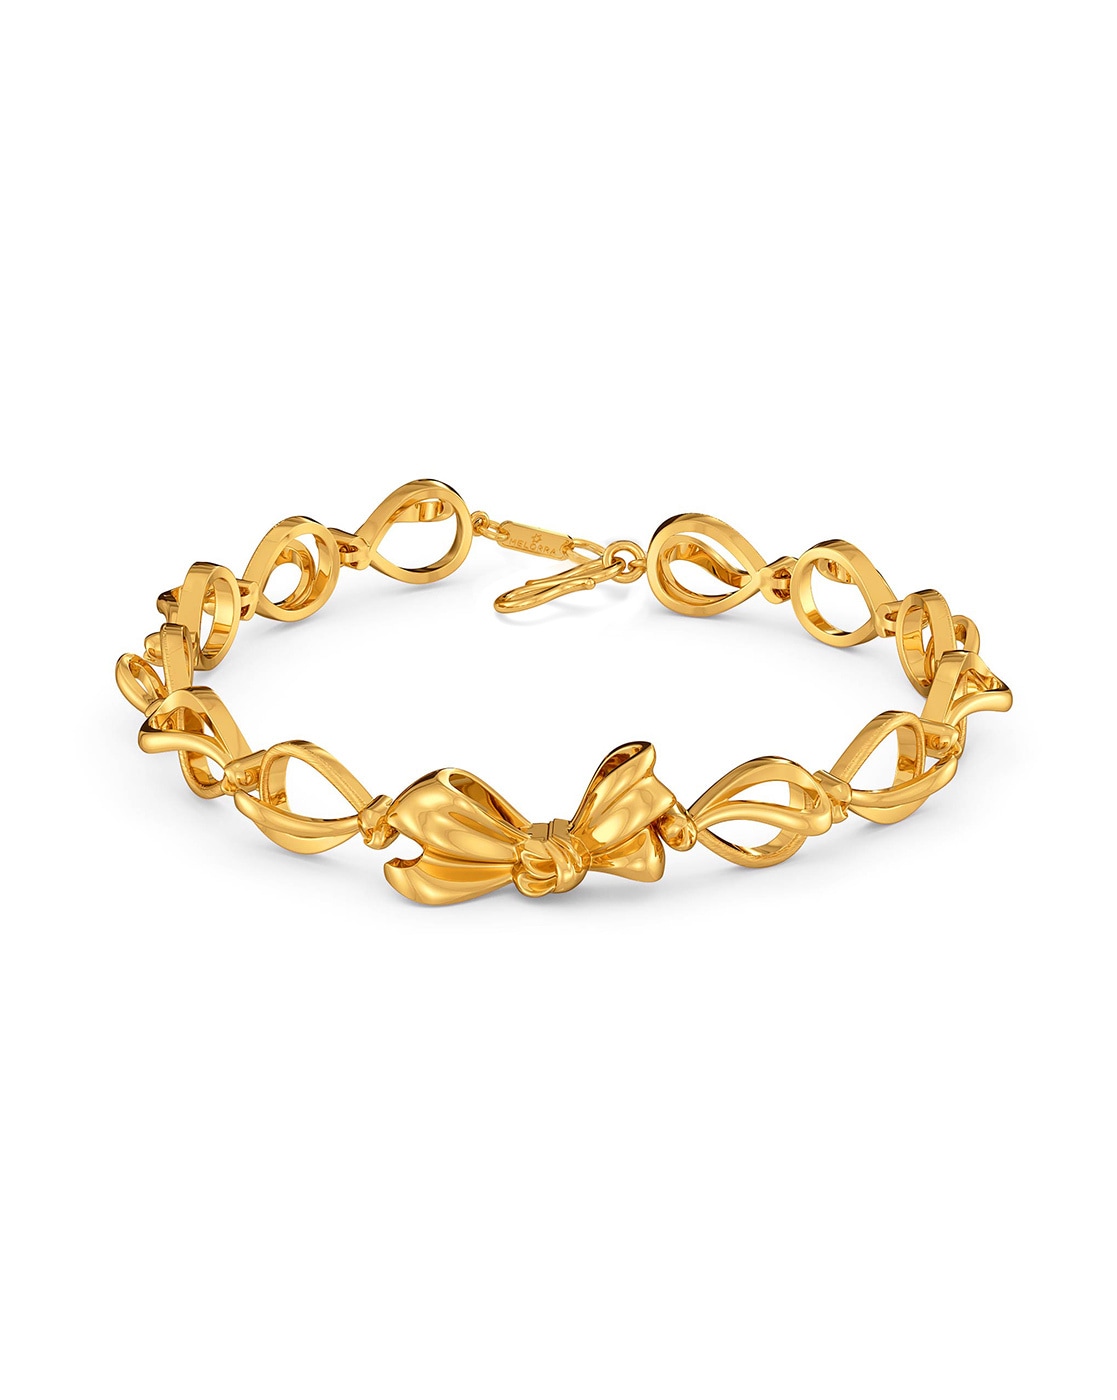 Buy Melorra 18K Citrus Limetta Gold Bracelets at Amazon.in